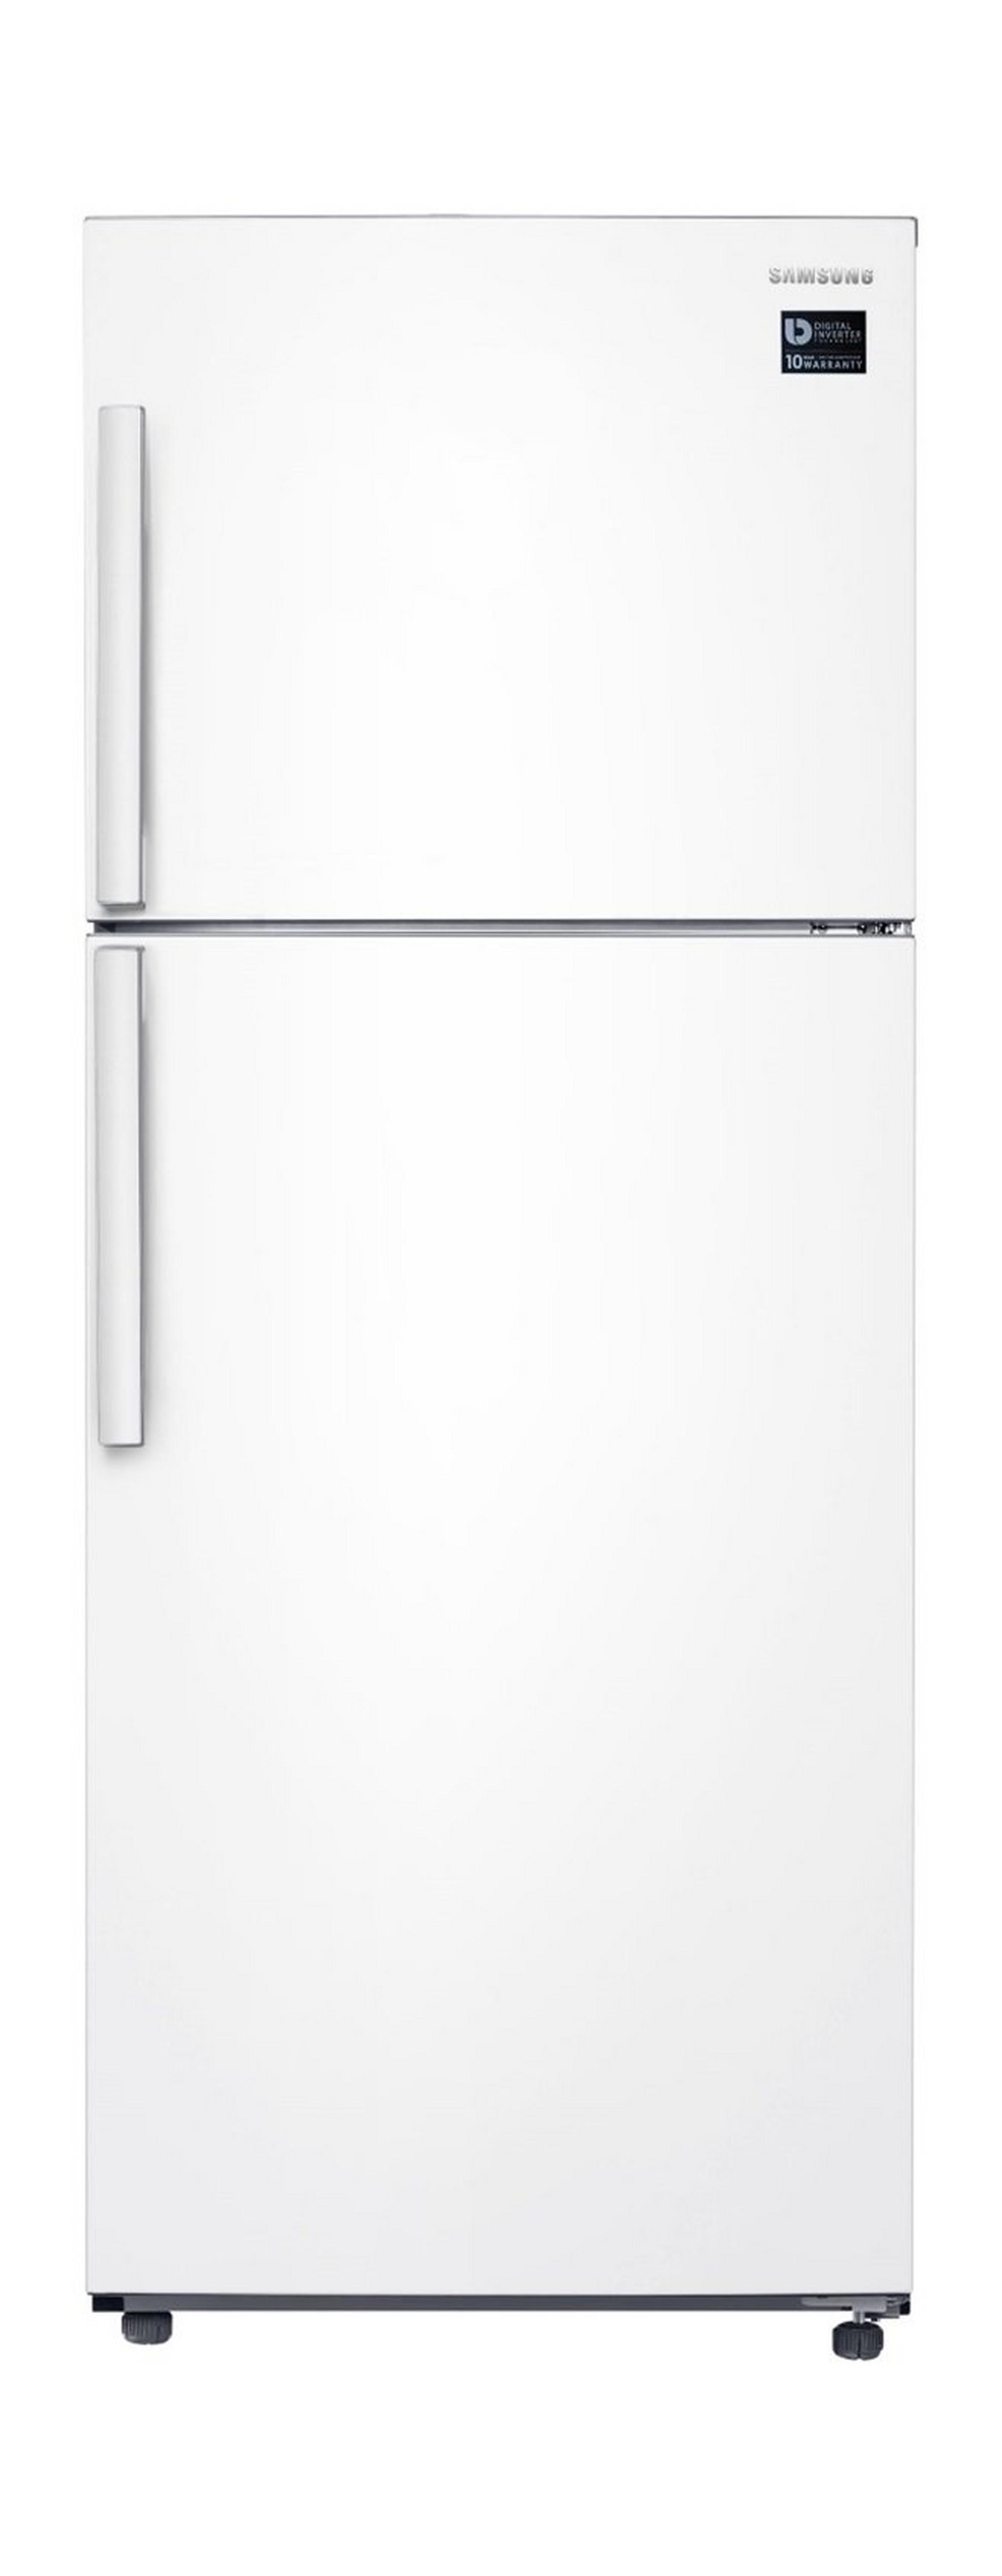 Samsung 12.70 CFT Top Mount Refrigerator (RT35K5157WWB) - White